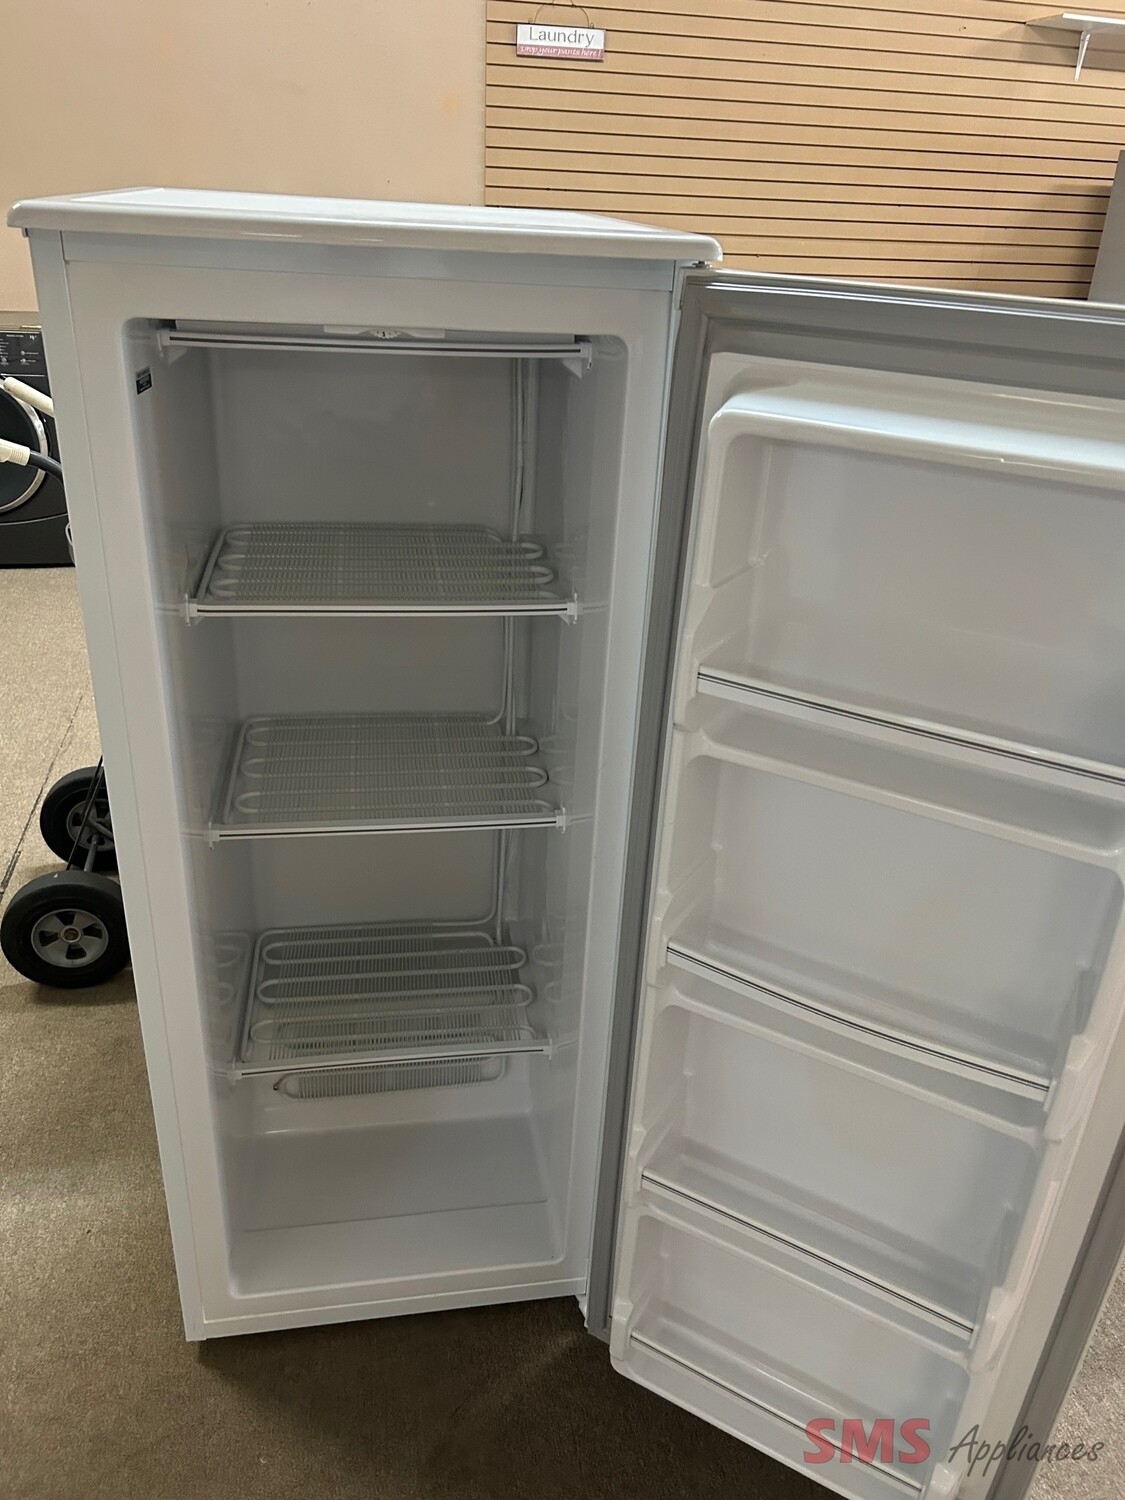 Danby Standing freezer Model:DUF808WE